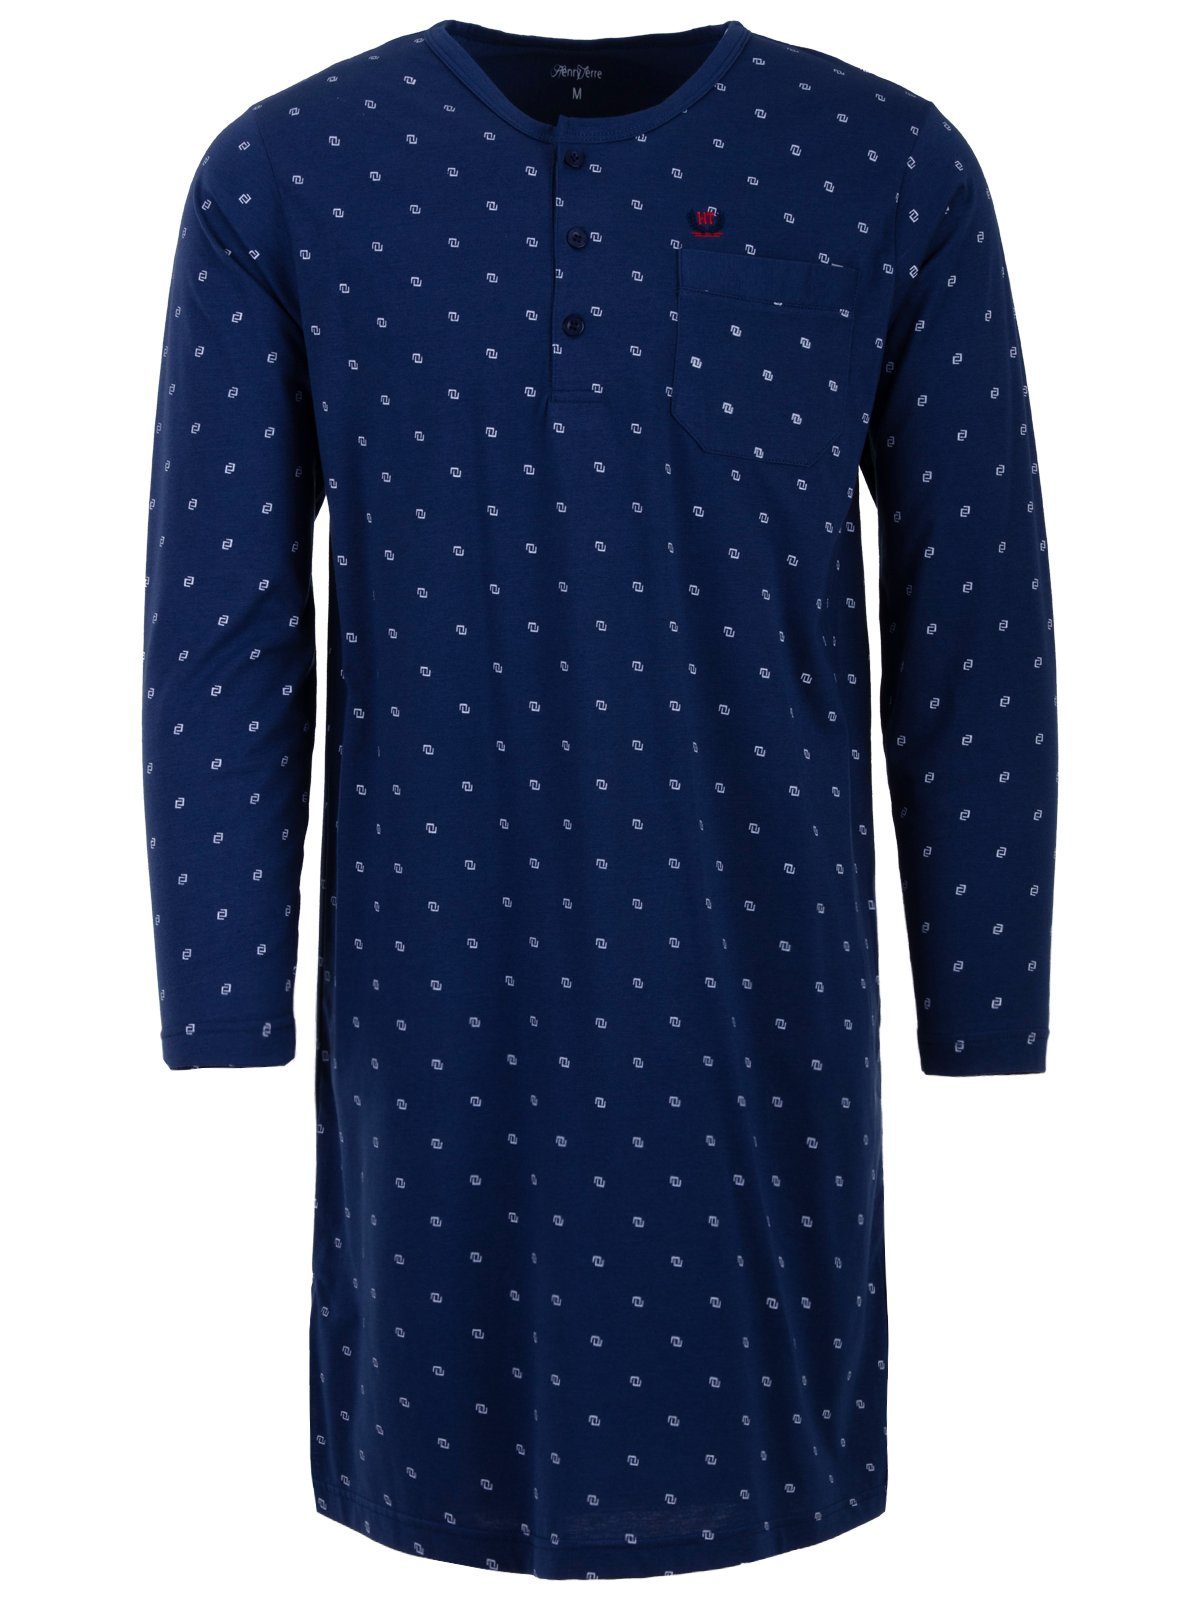 Henry Terre Nachthemd Nachthemd Langarm - Allover blau